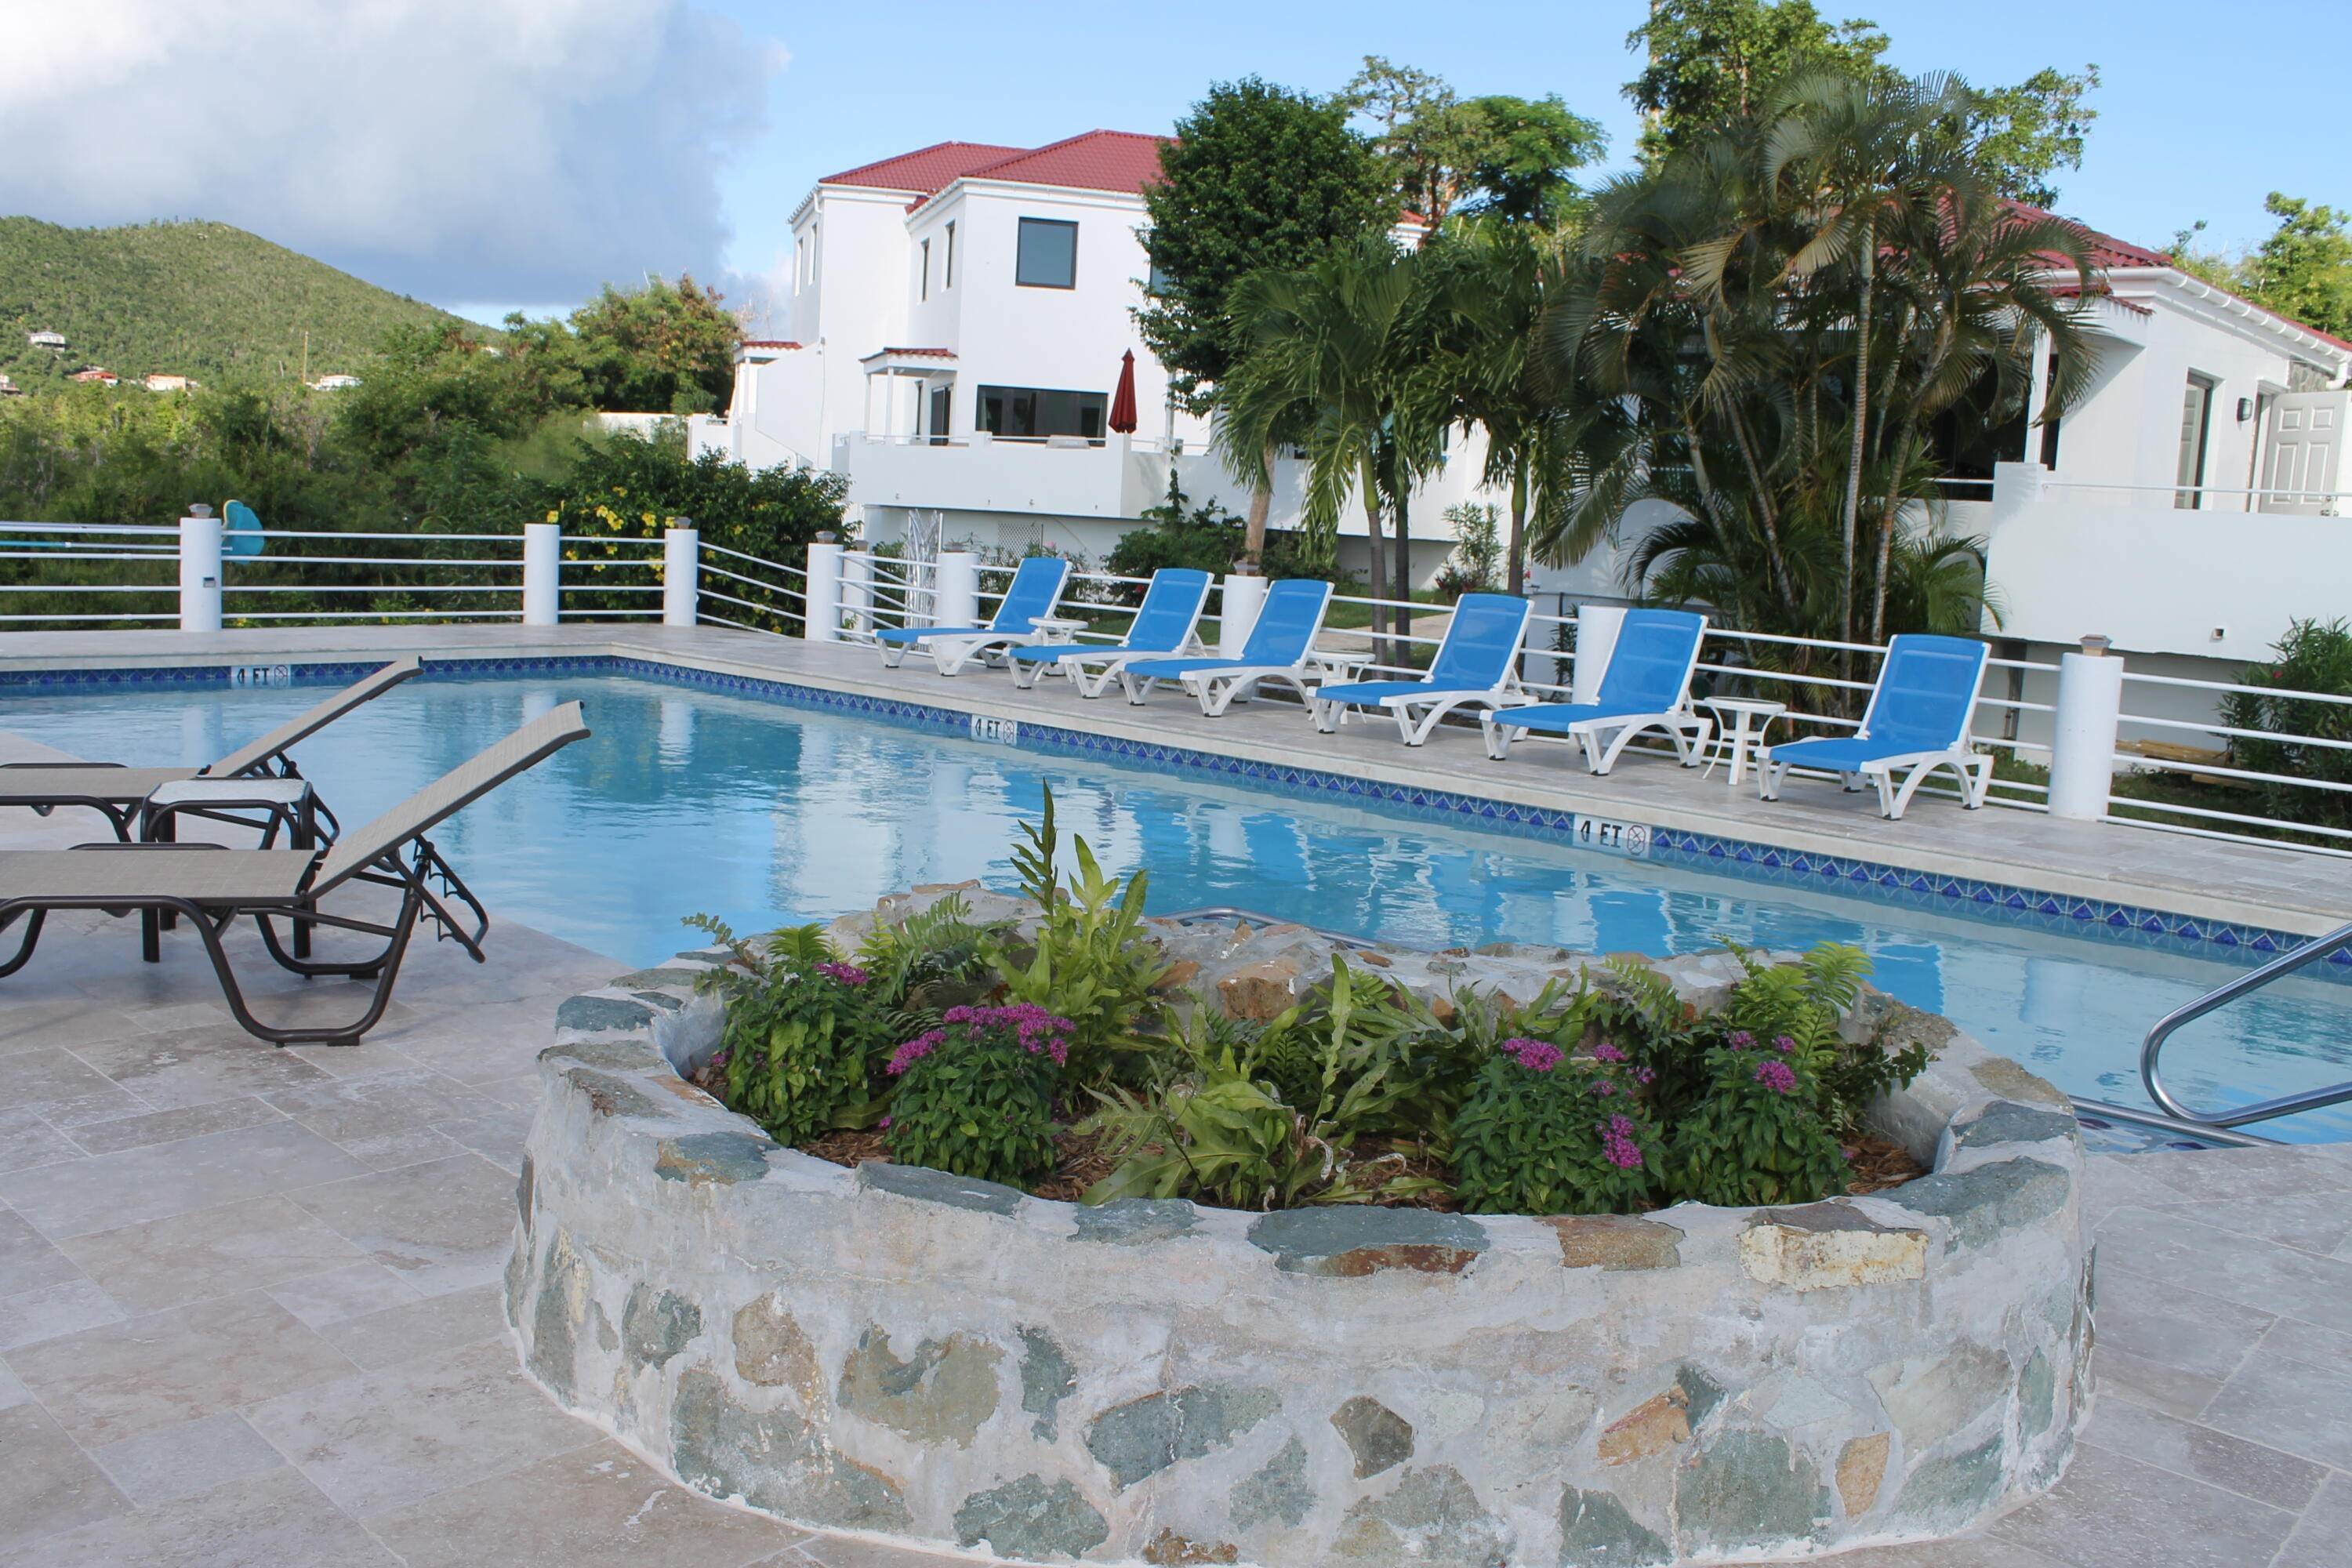 1. fractional ownership prop for Sale at Bethany St John, Virgin Islands 00830 United States Virgin Islands